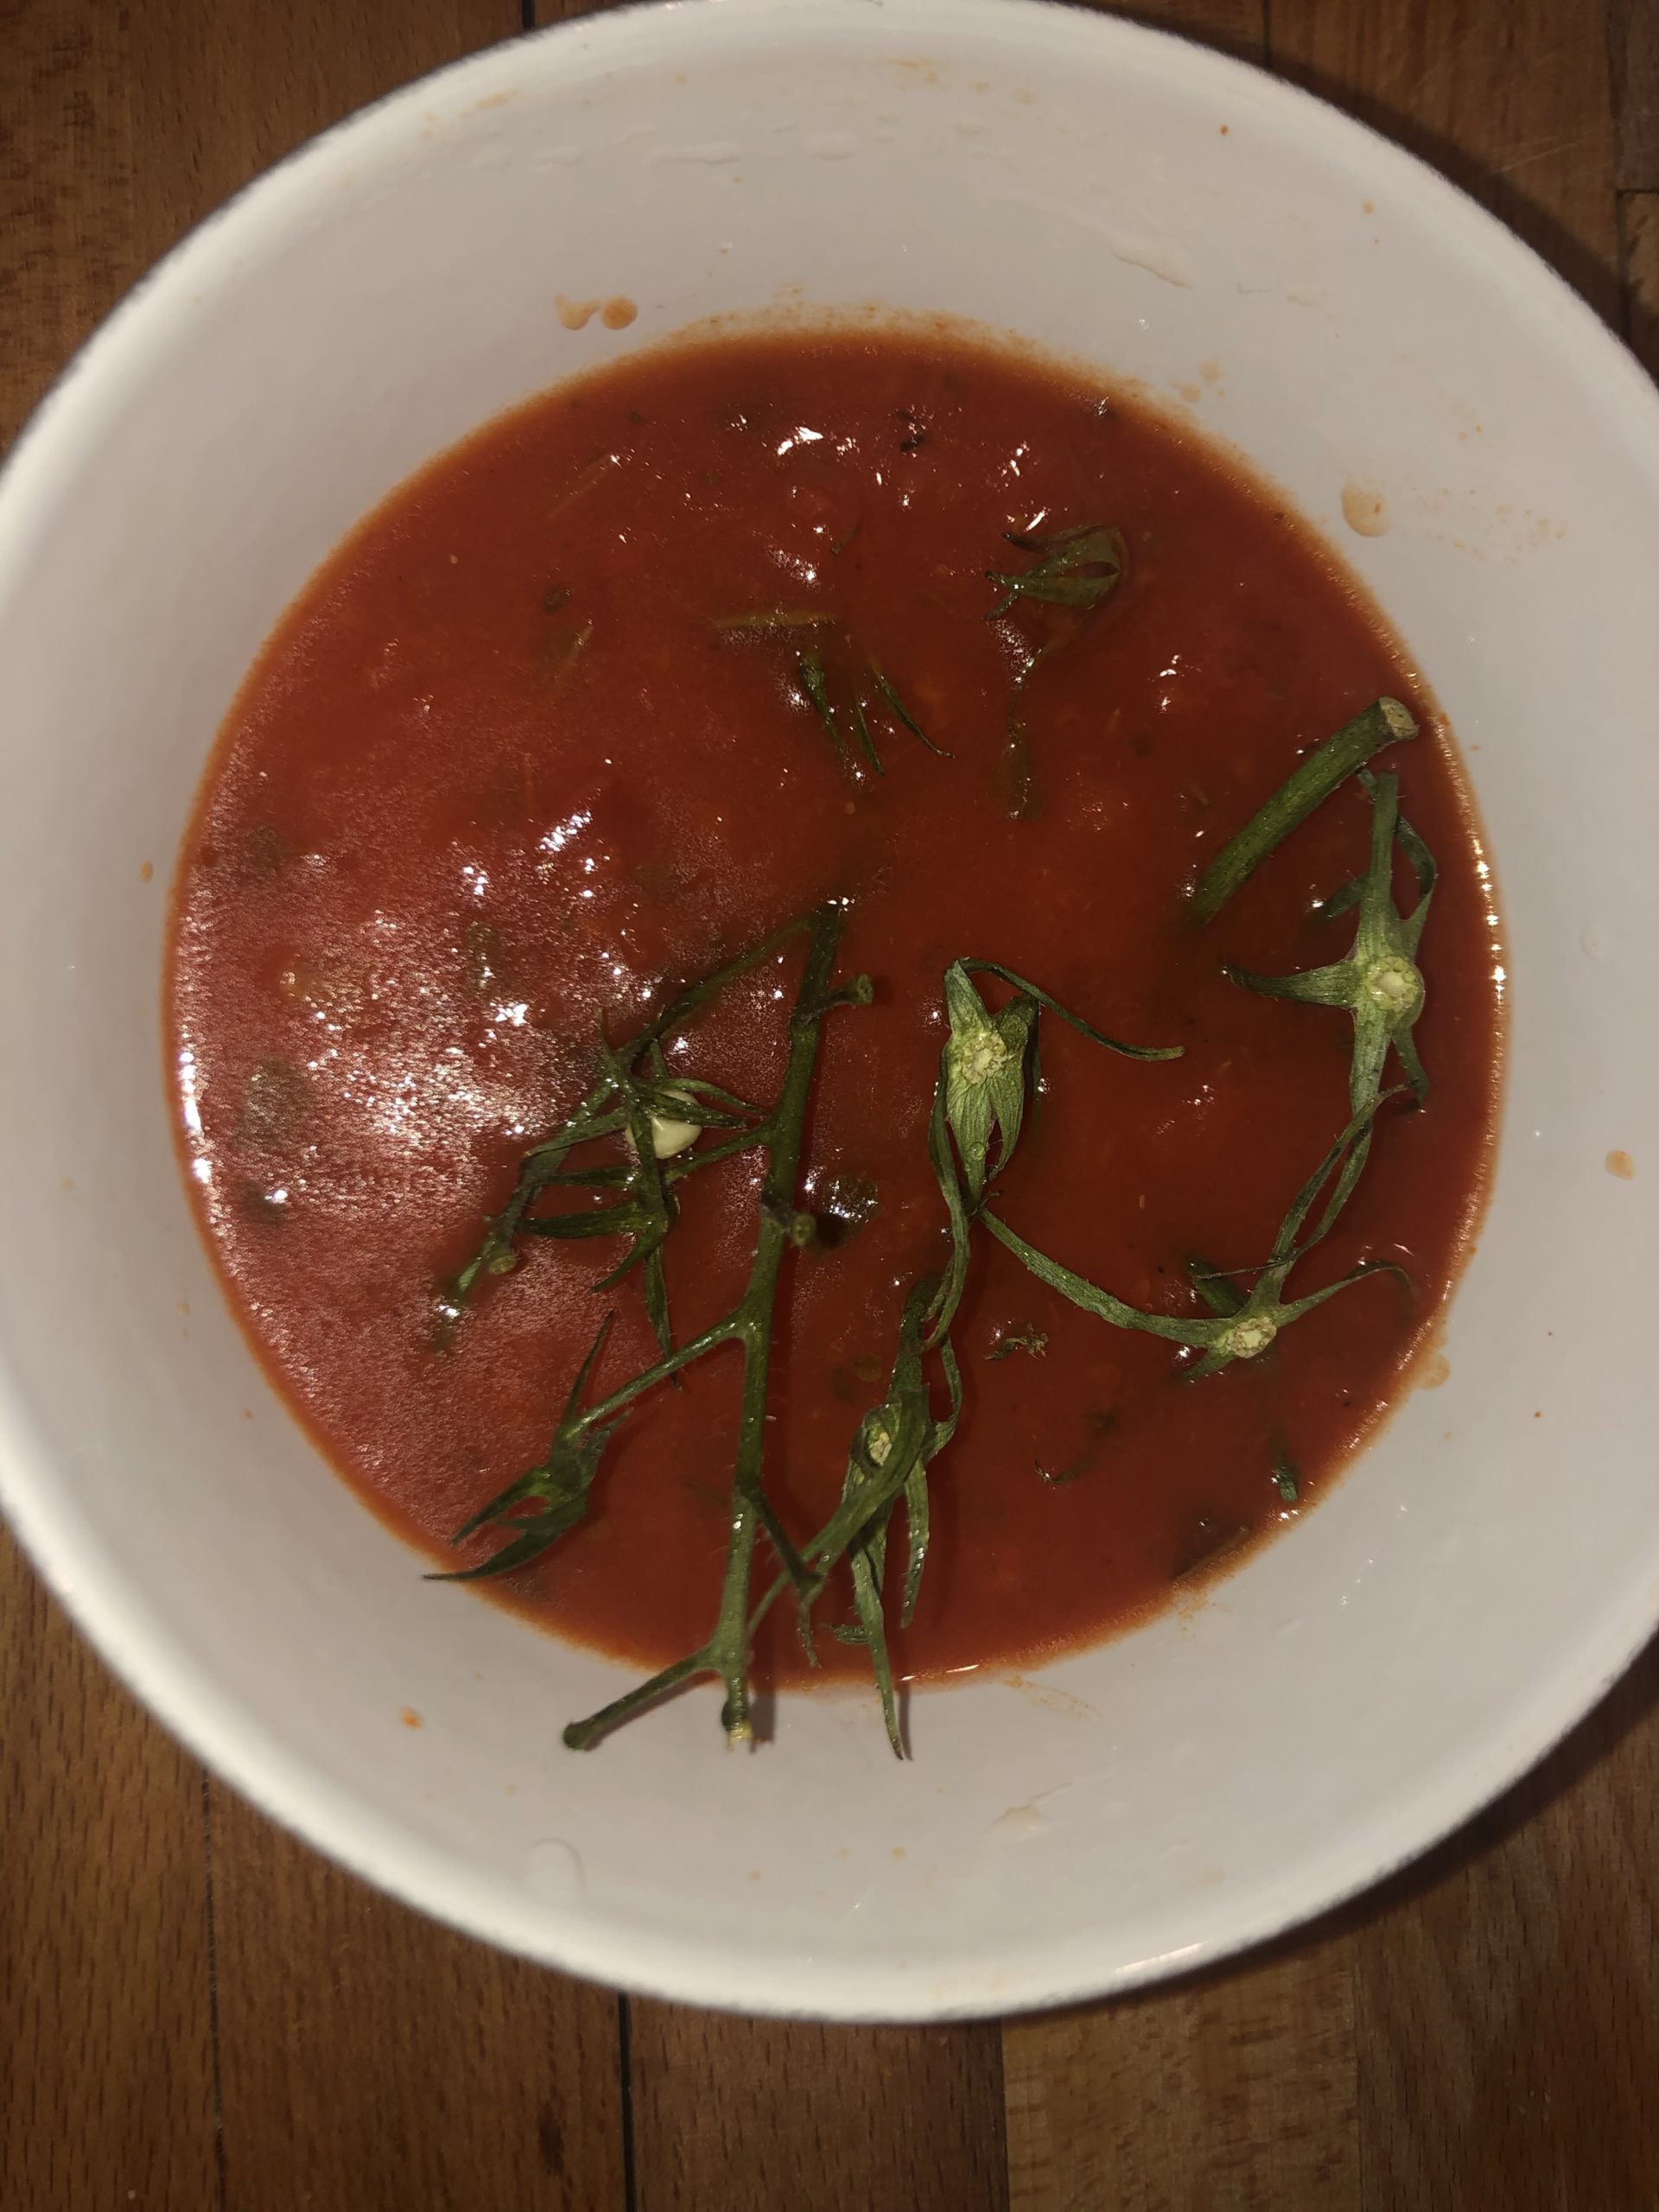 Tomato vines add flavor to soup.